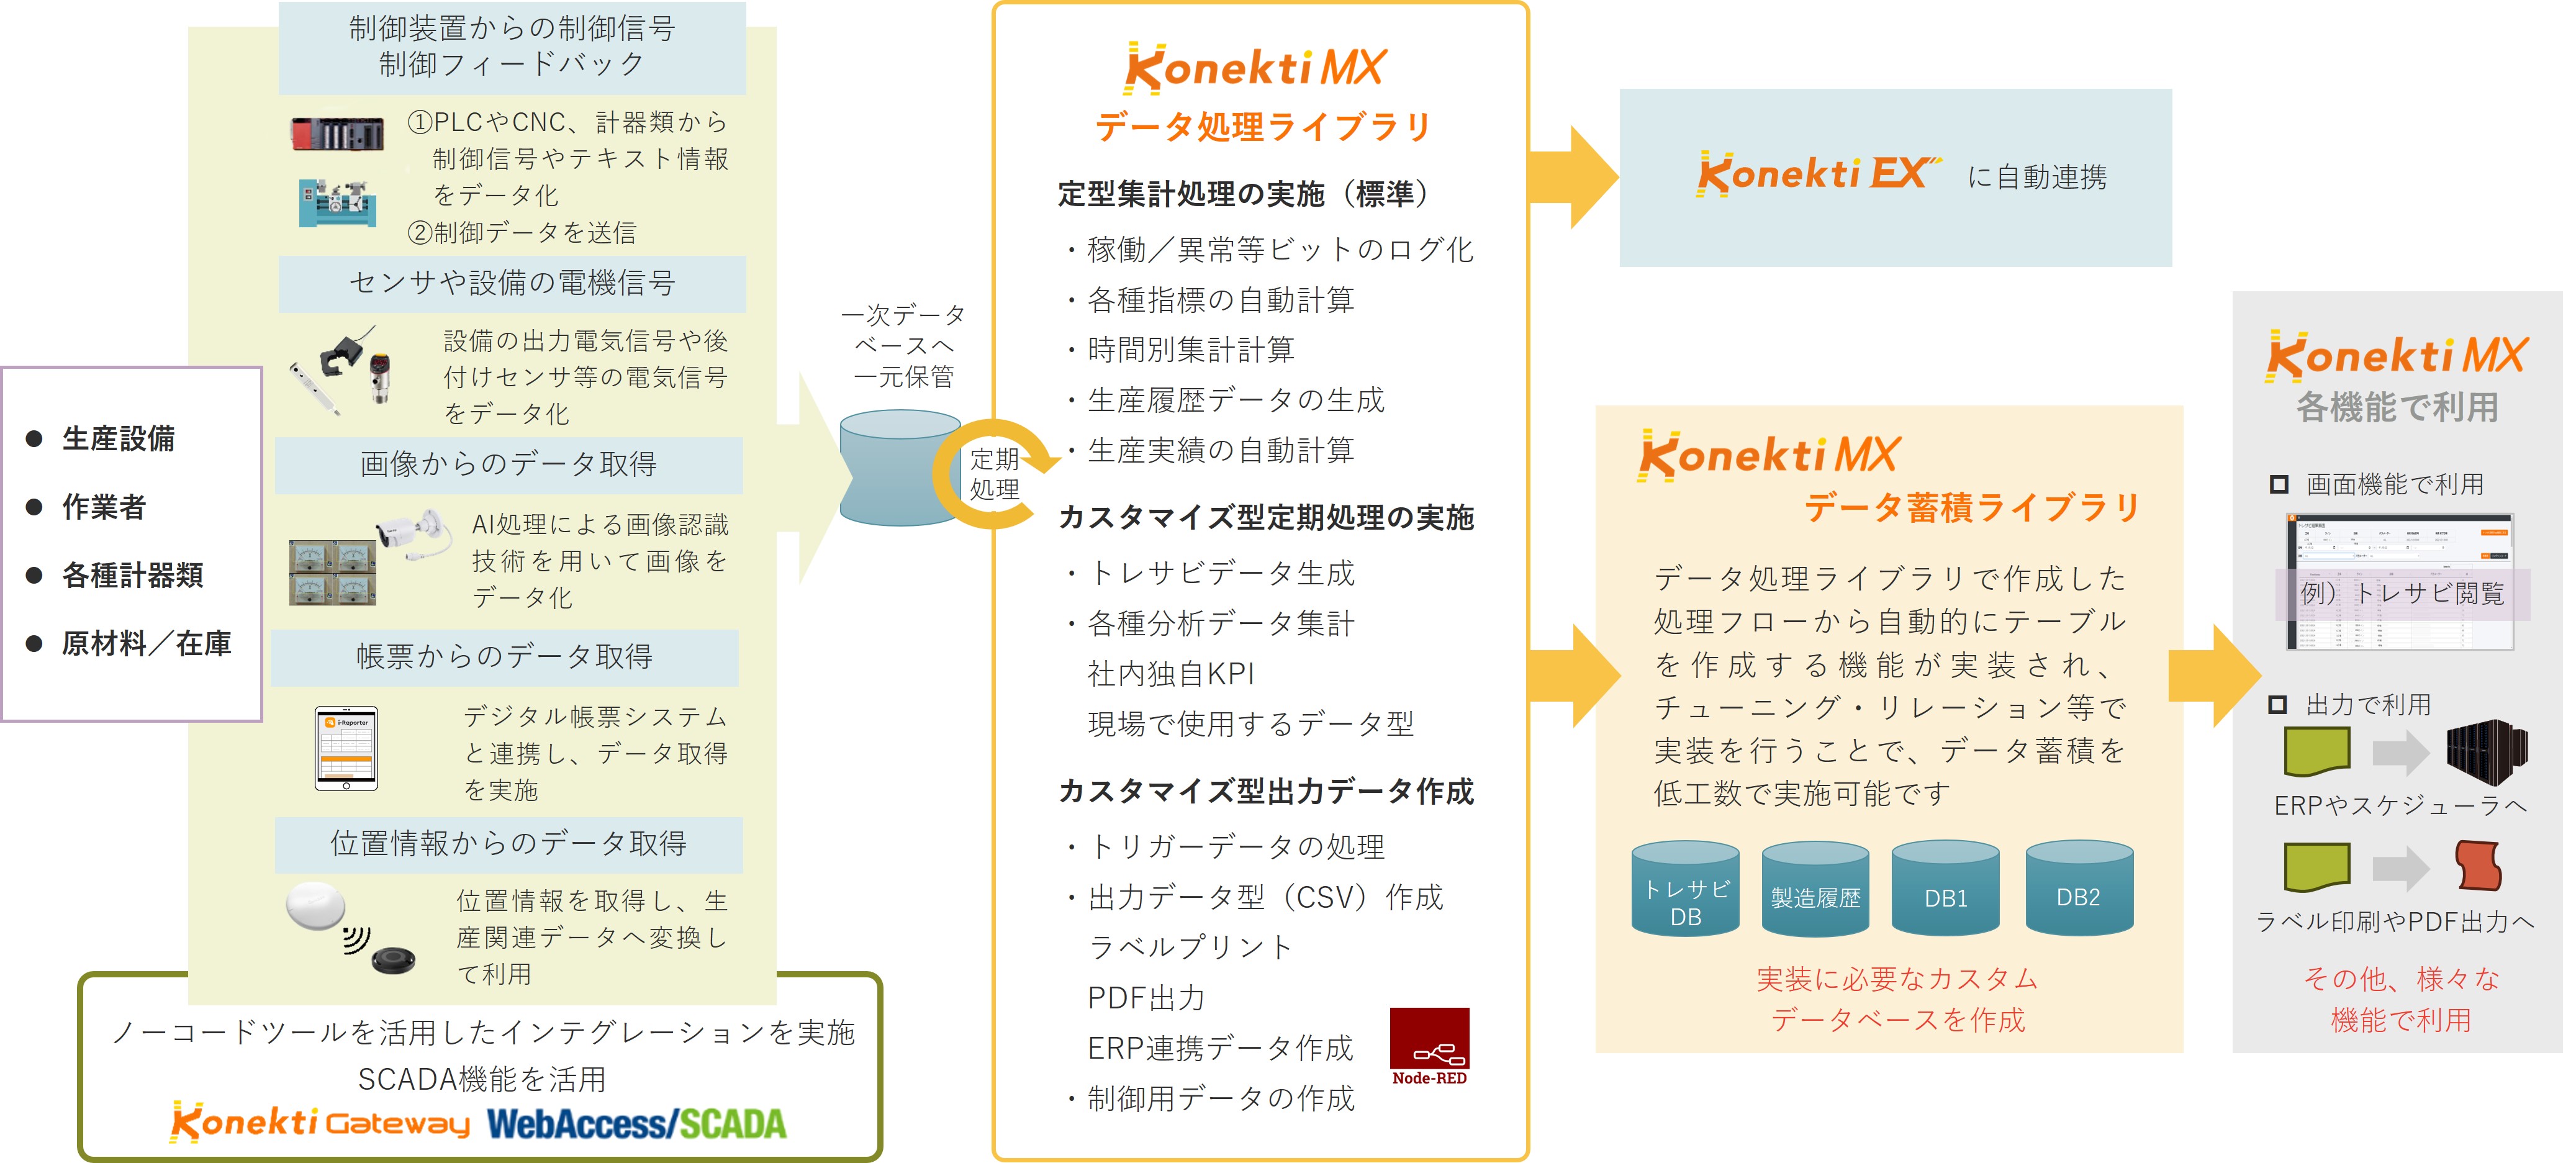 Konekti MX 機能1：データ蓄積機能の概要図